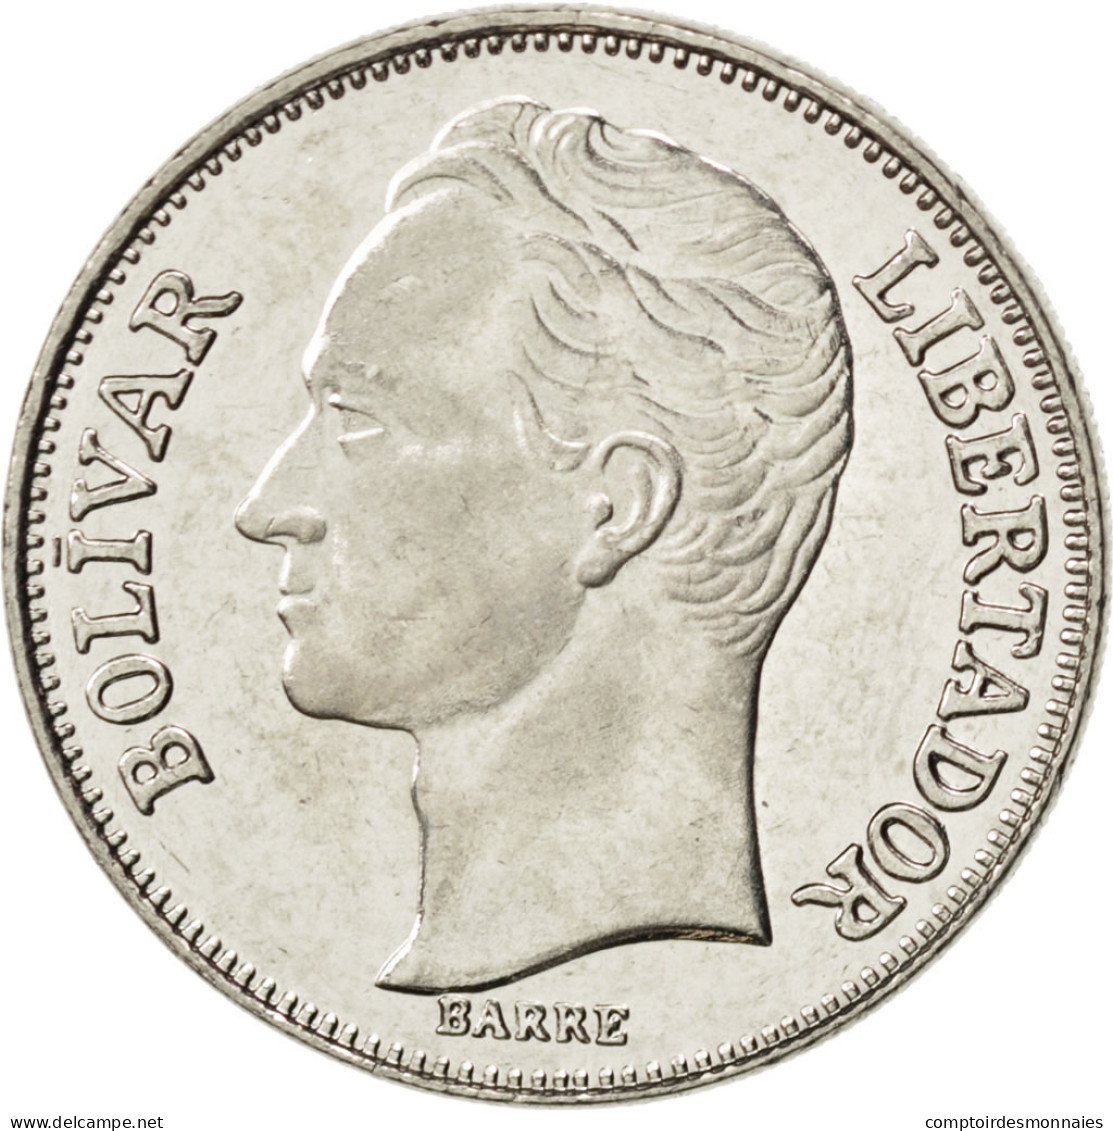 Monnaie, Venezuela, 2 Bolivares, 1989, SPL, Nickel Clad Steel, KM:43a.1 - Venezuela